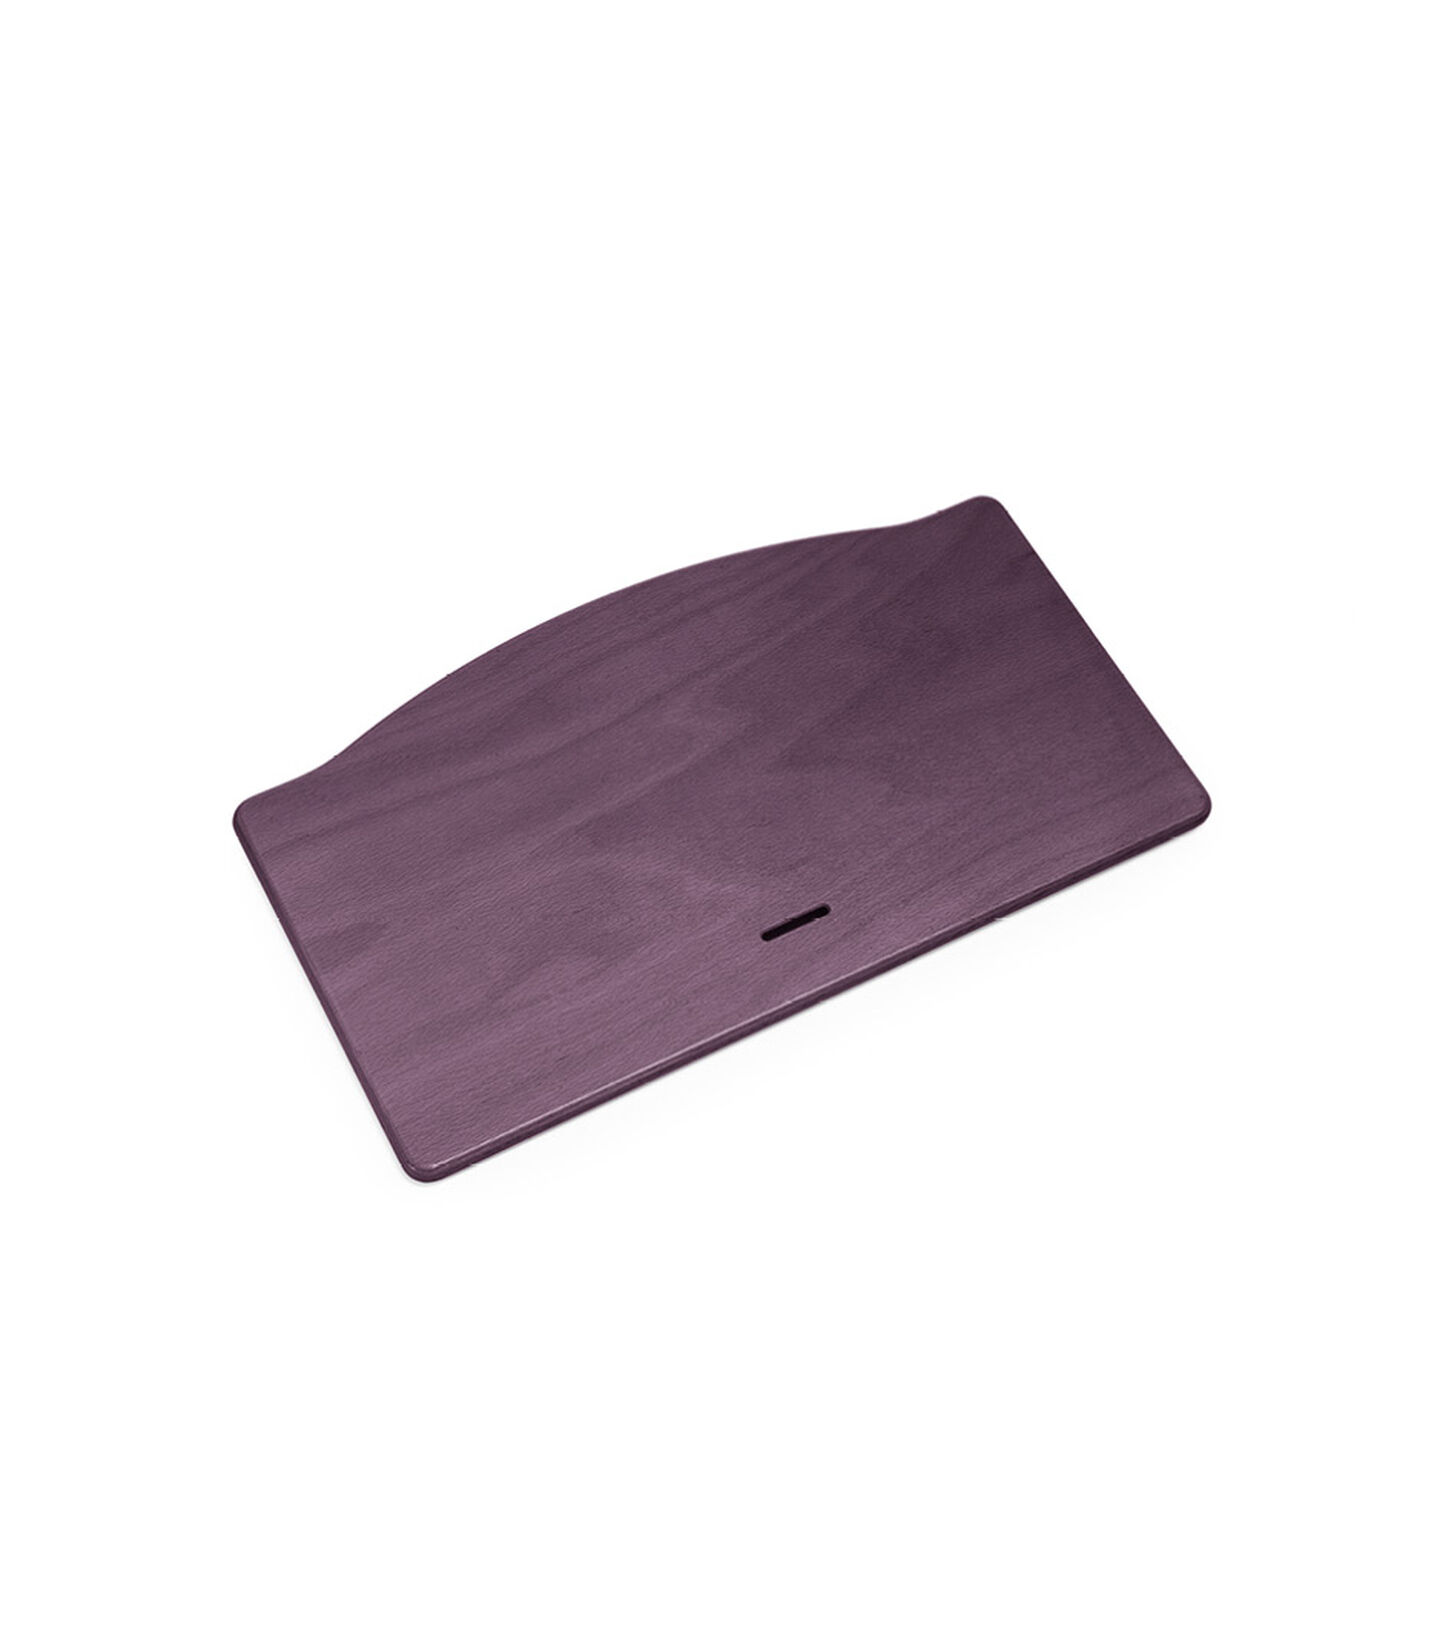 Tripp Trapp® Seatplate Plum Purple, Prugna, mainview view 1